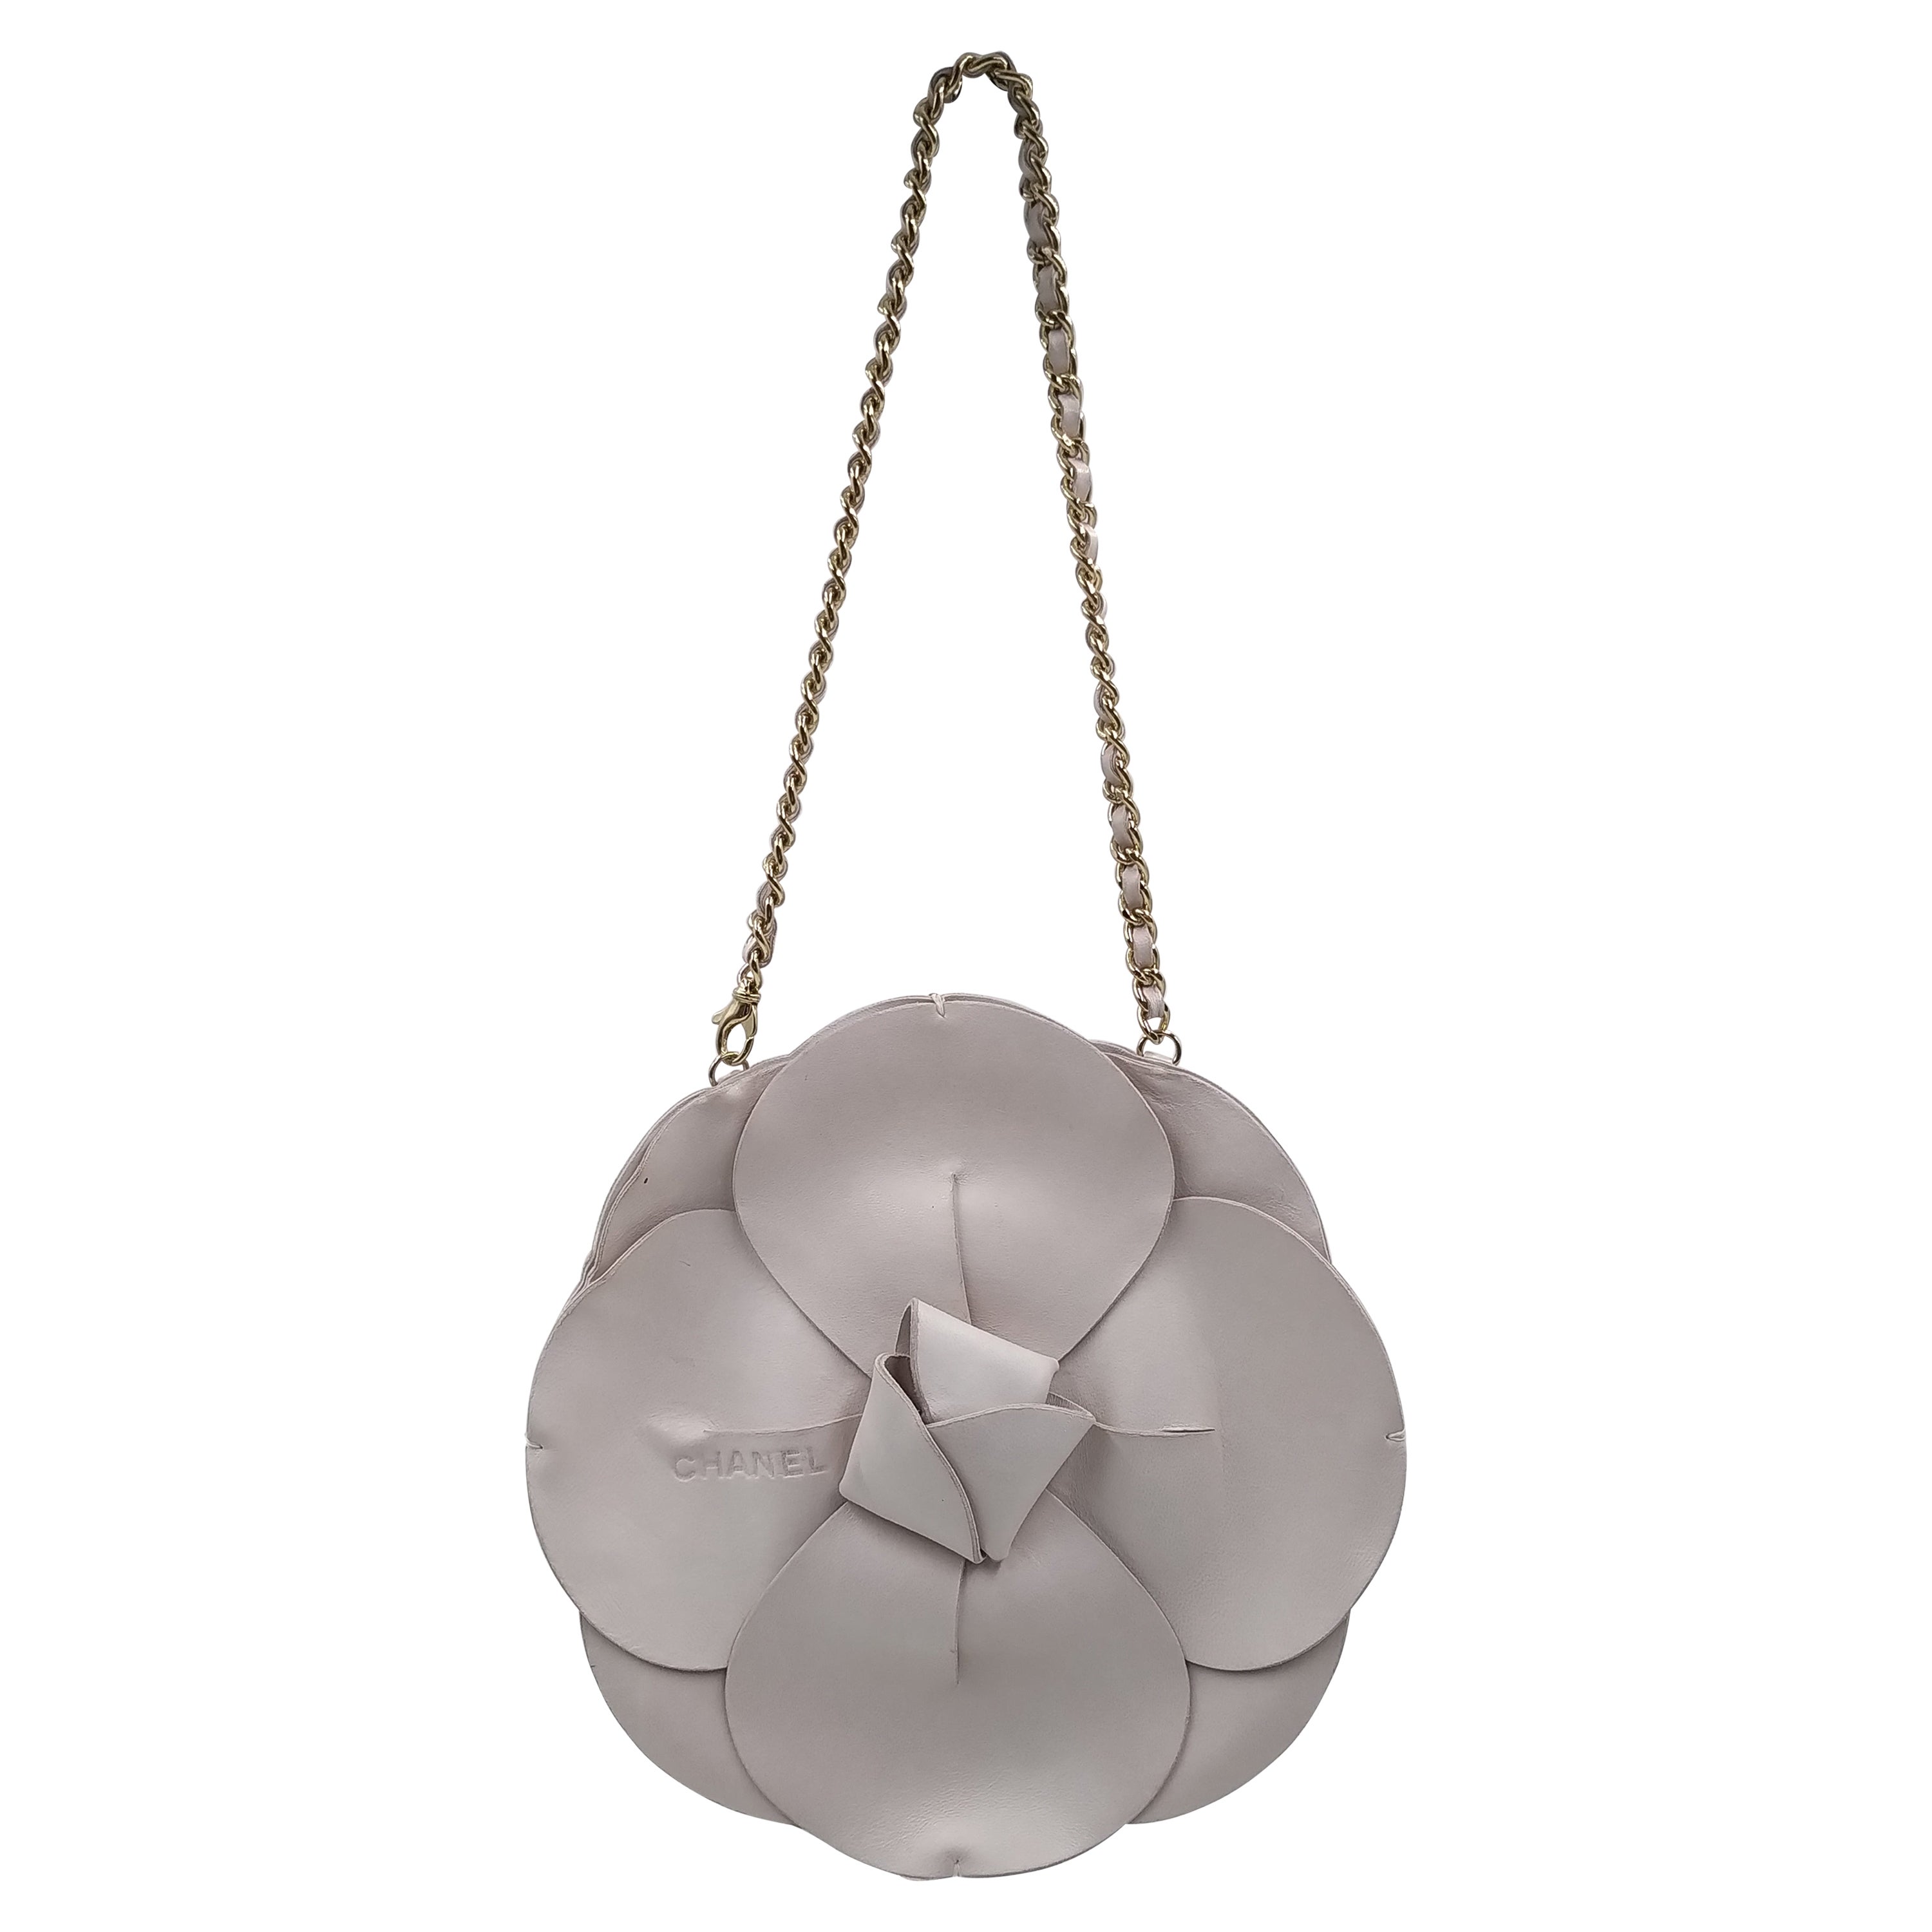 Camellia Flower Flap Bag Chanel Lot 1207  Estate Jewelry Sterling  Silver  Luxury AccessoriesMar 17 2022 900am